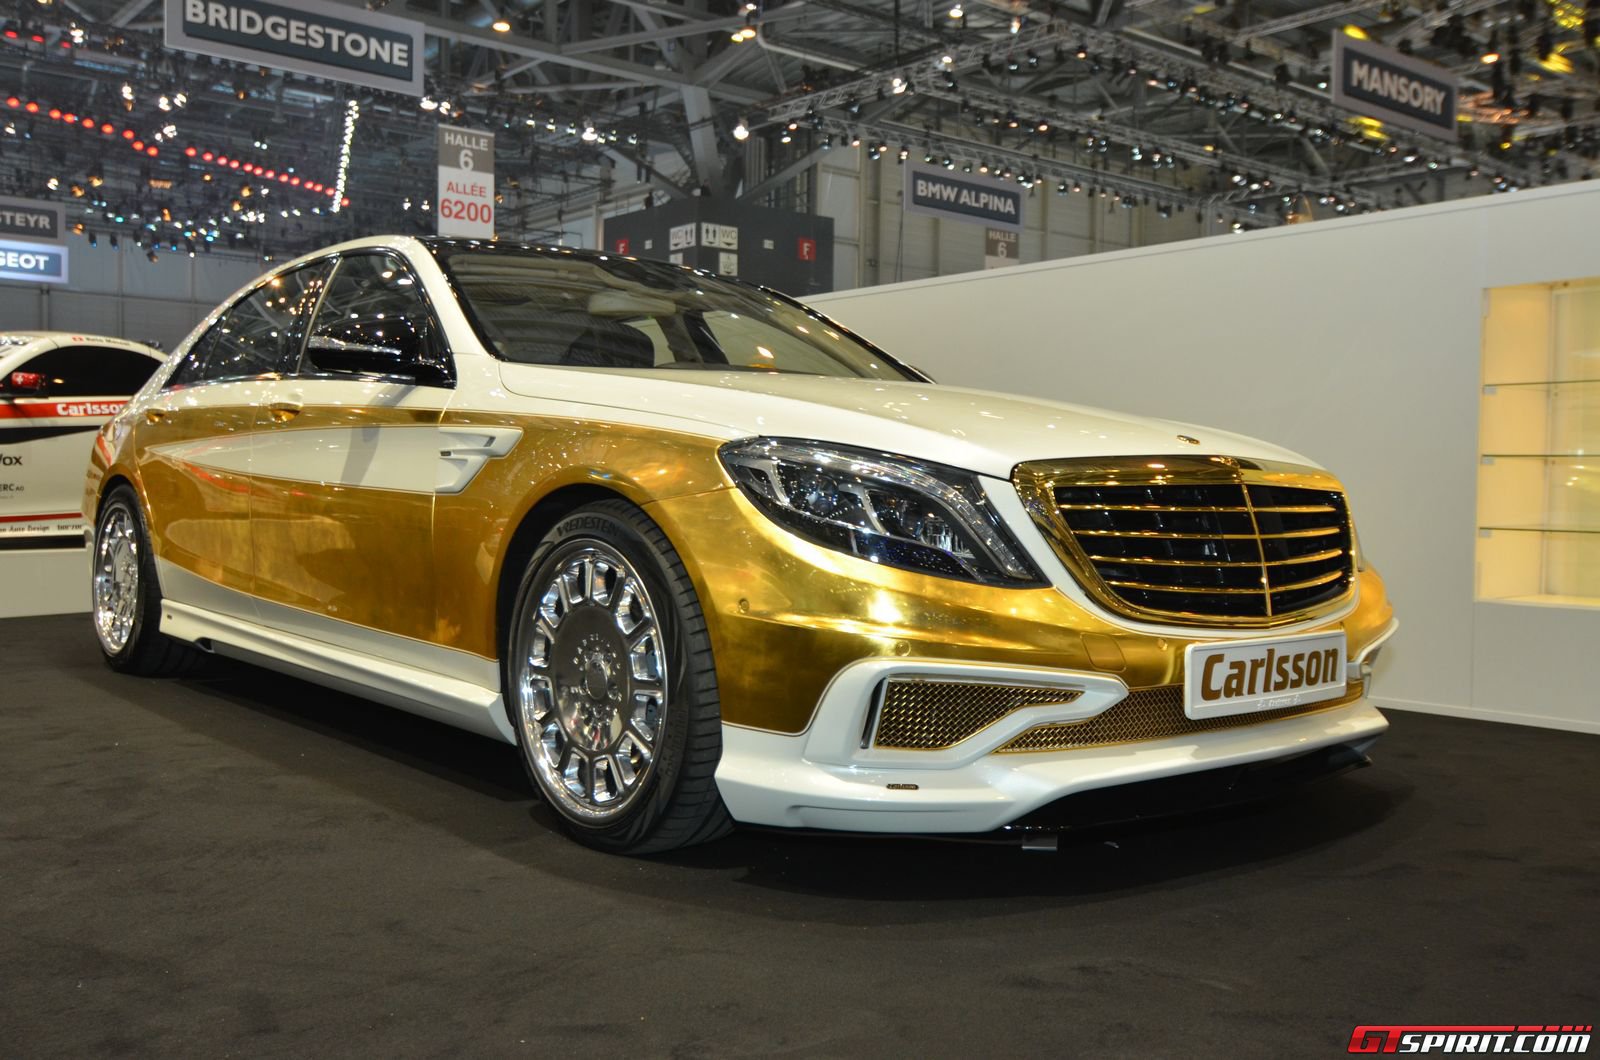 Carlsson SC50 Gold Edition at Geneva Motor Show 2014